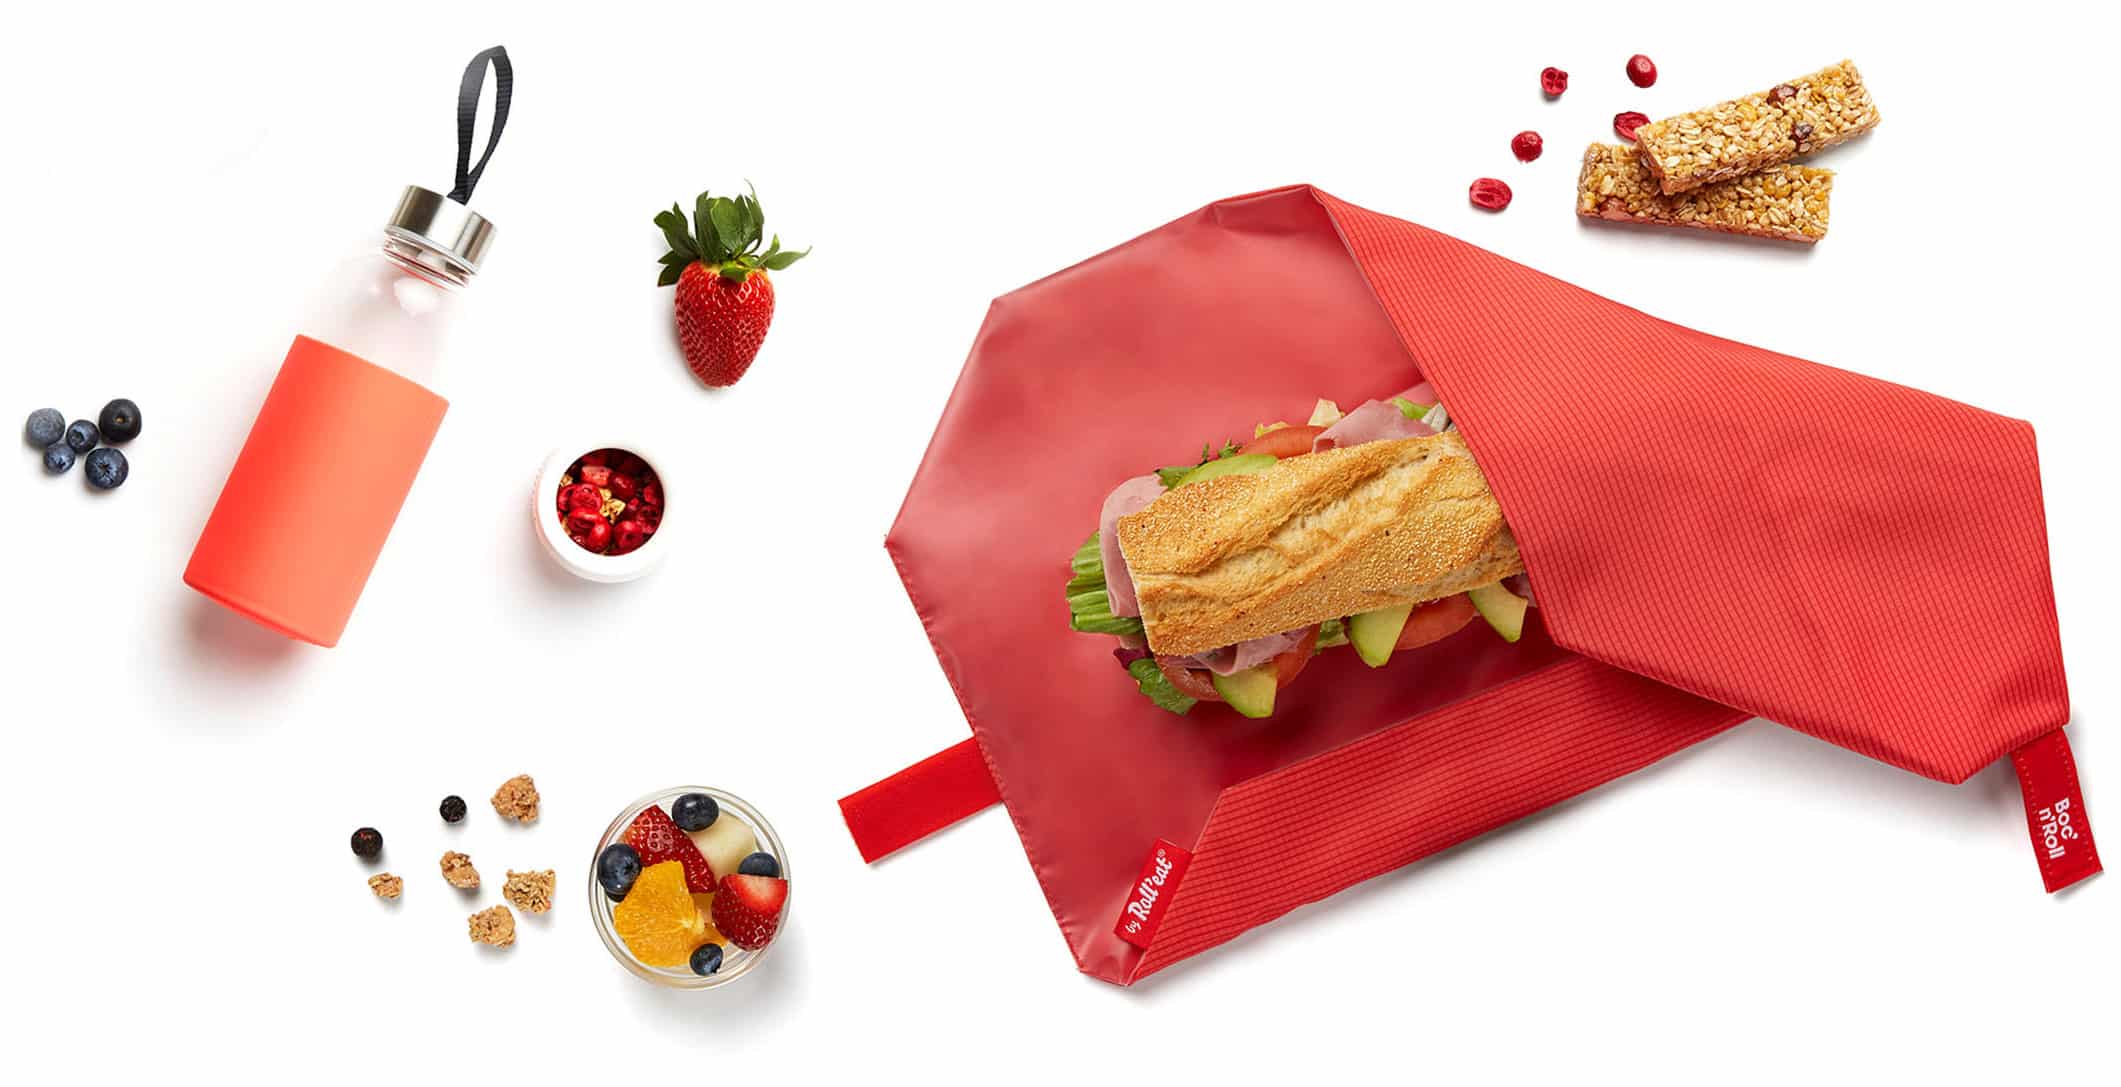 Porta alimenti Lunch box Borsa porta alimenti tovaglietta Lunchbag NEW- Rolleat EatnOut arancia 2 in 1 Lunch bag 